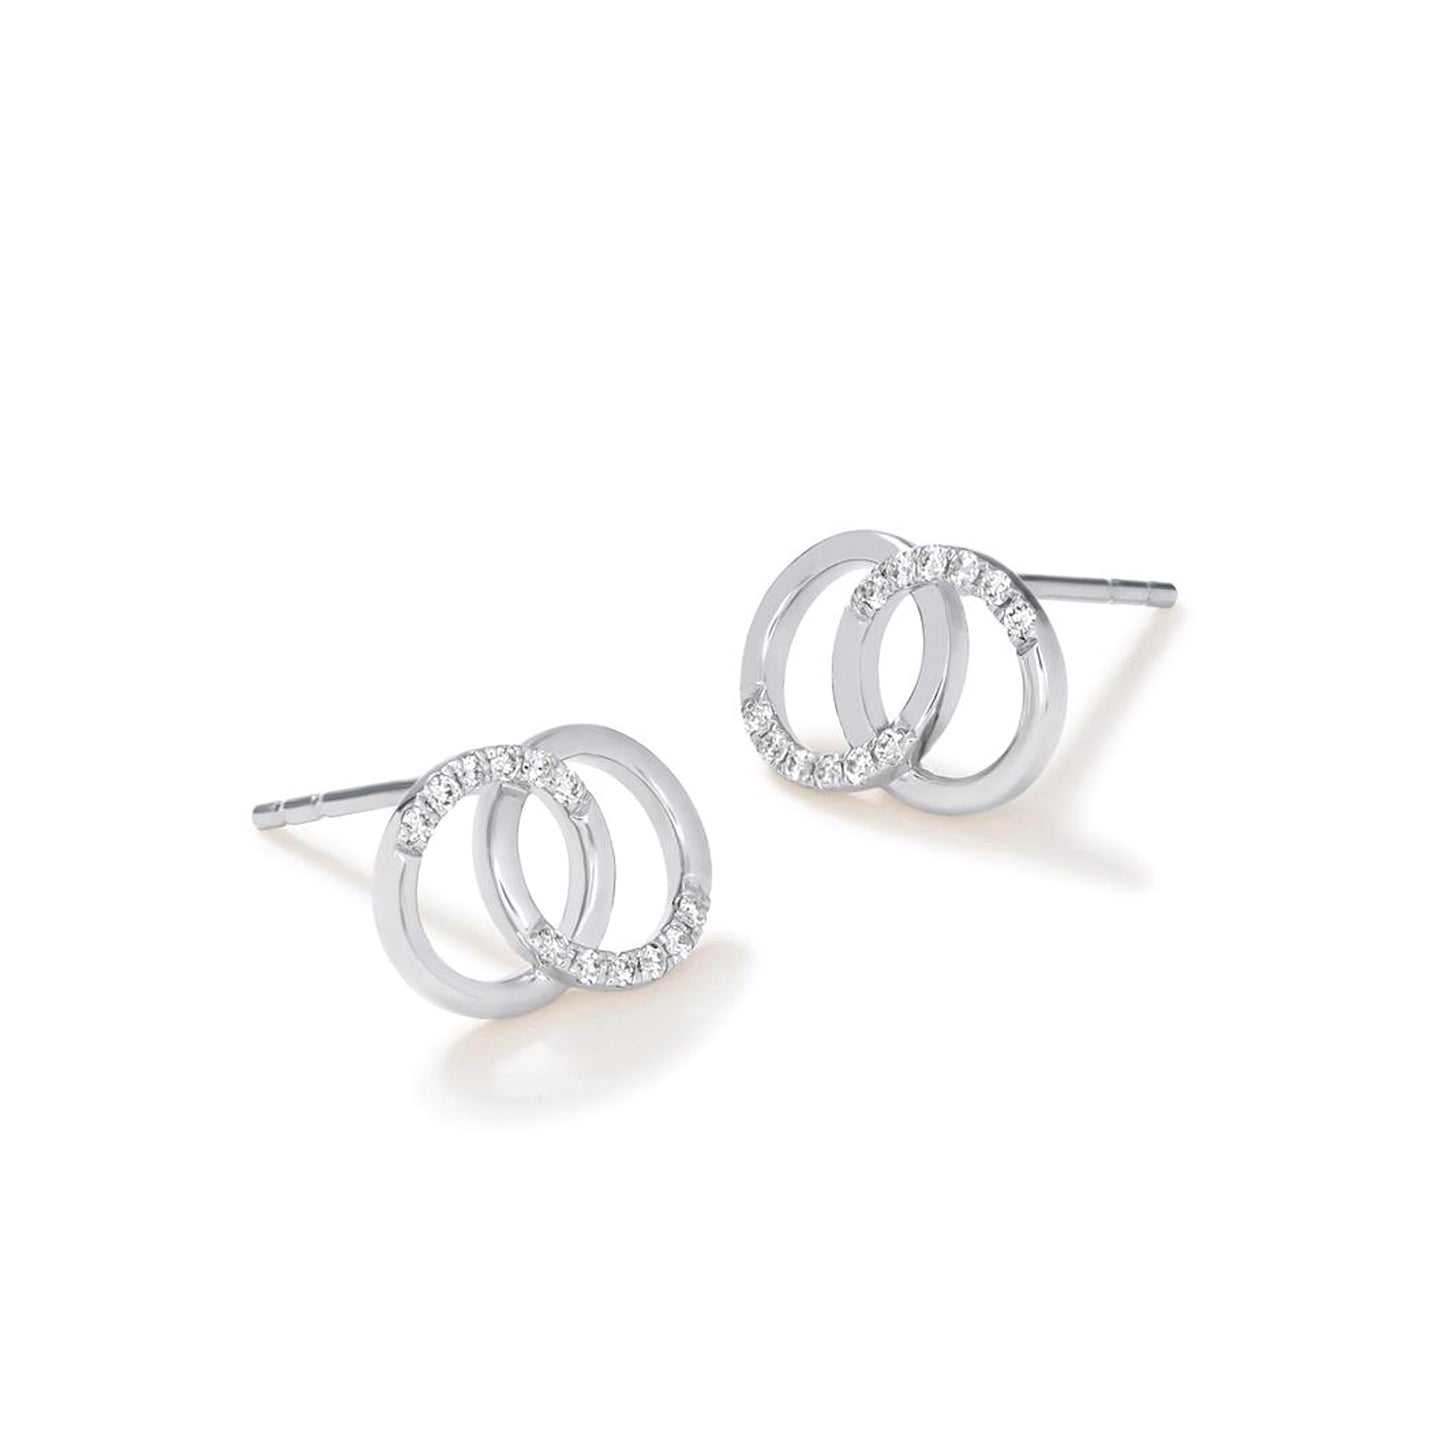 Dual Ring Diamonds &14K White Gold Stud Earrings